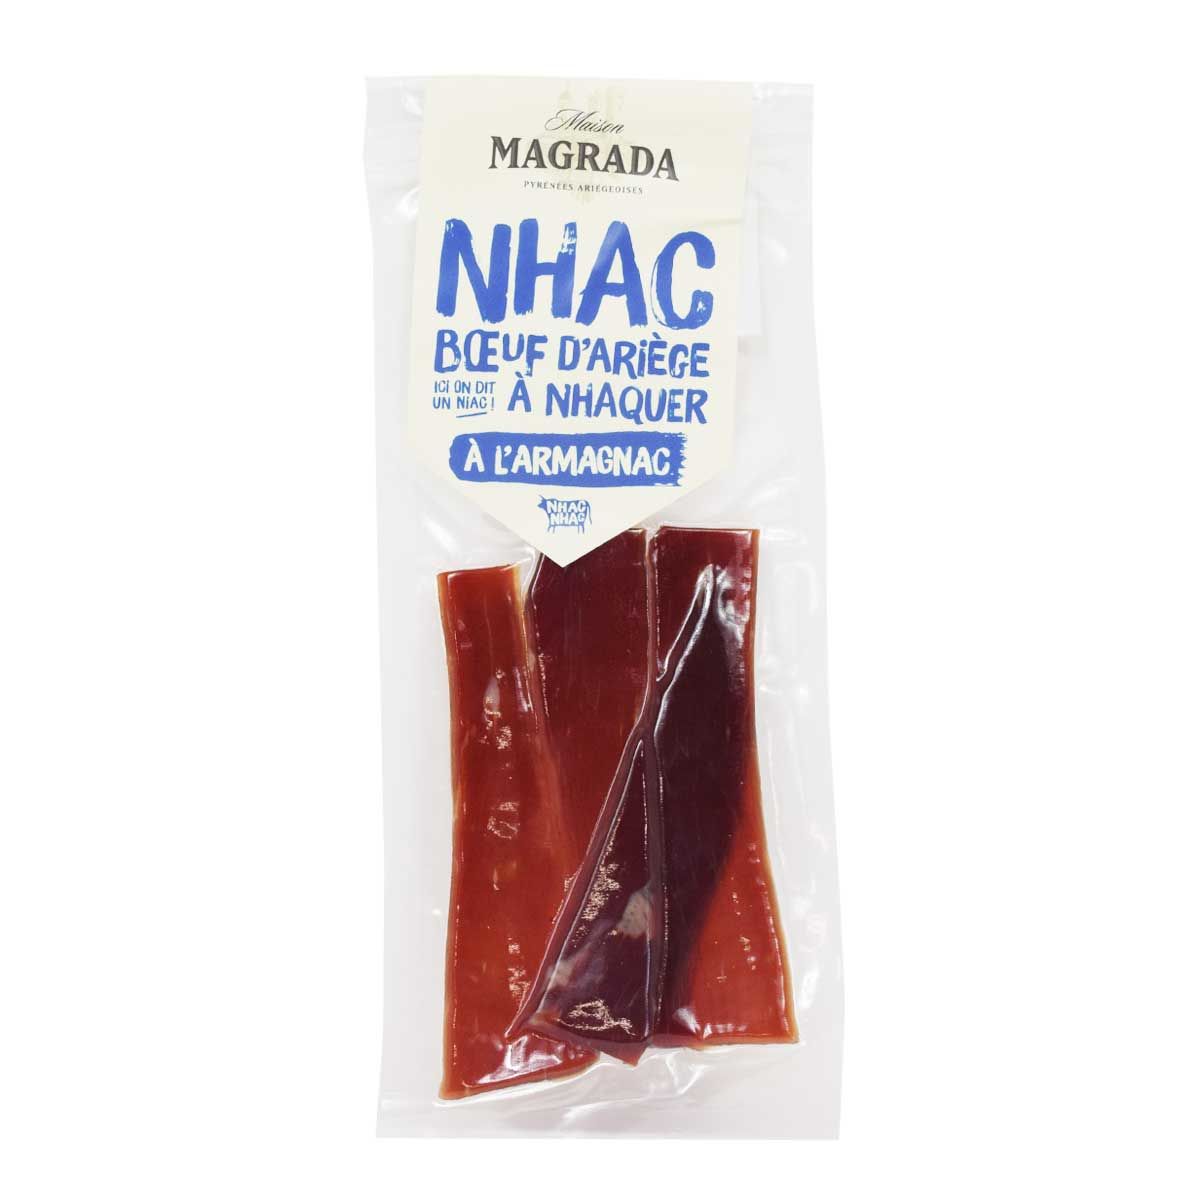 NHAC - Ariège dried neef with Armagnac - 30g